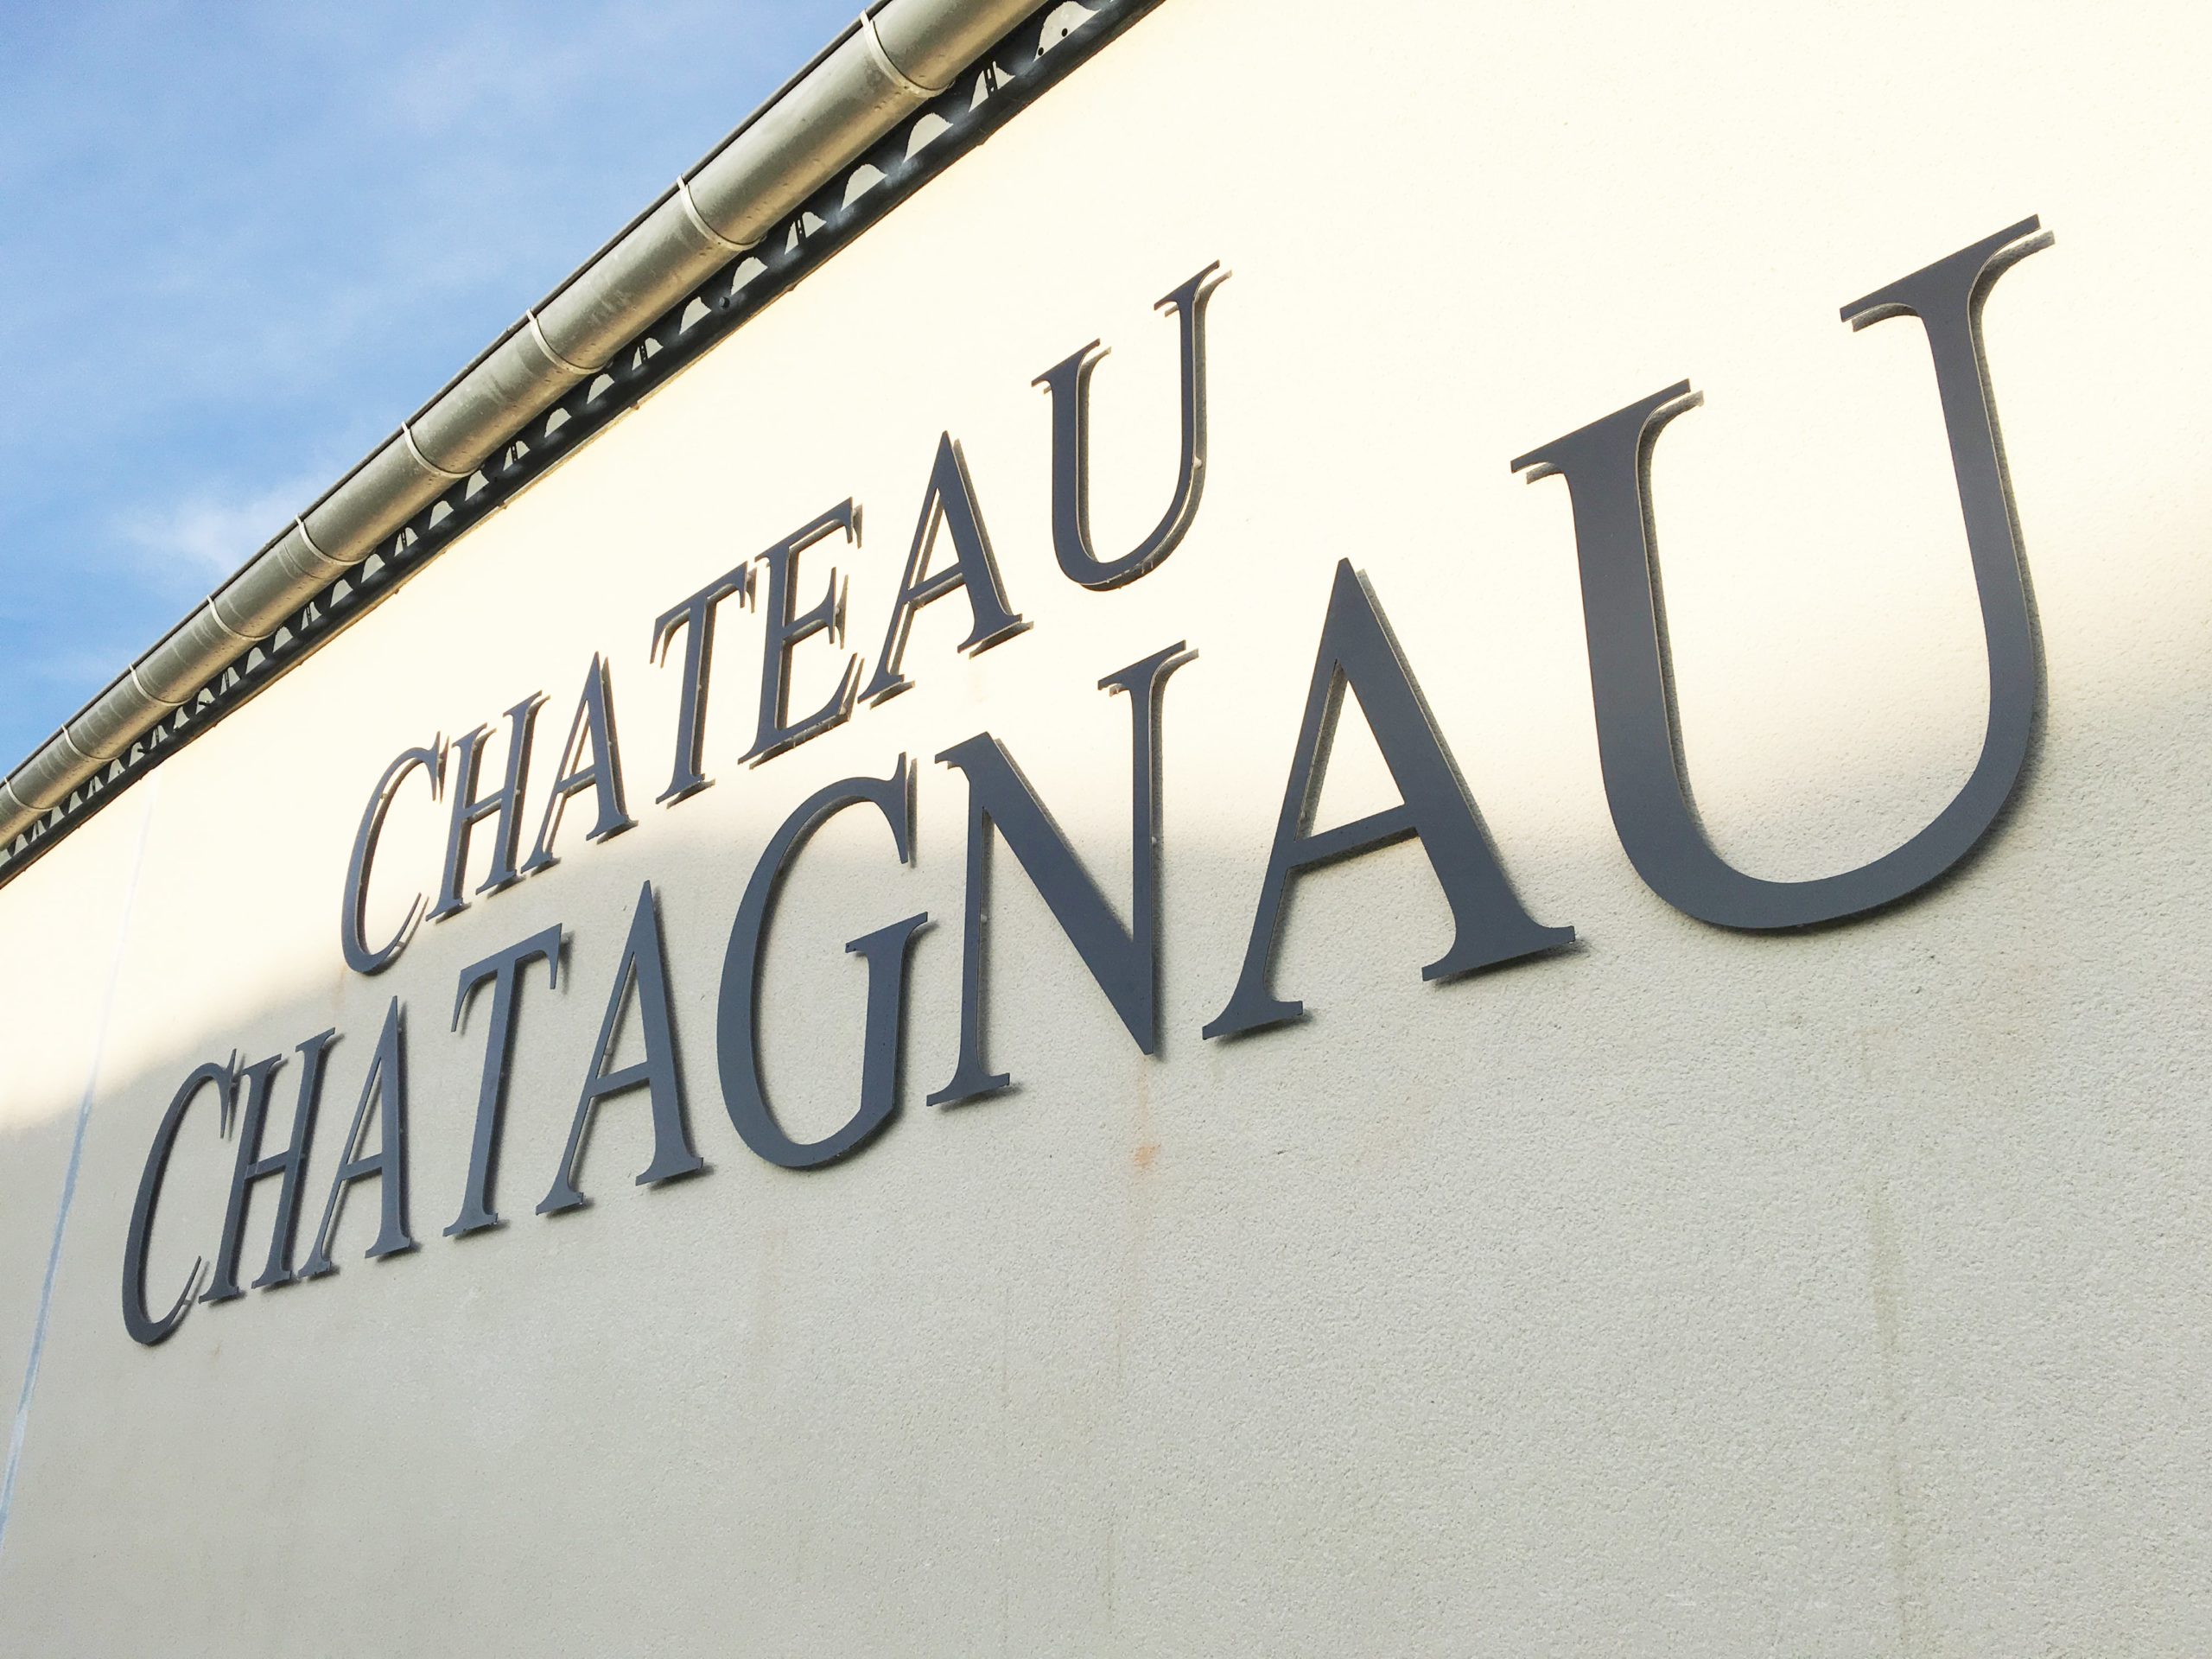 Lettrage devanture Chateau chatagnau